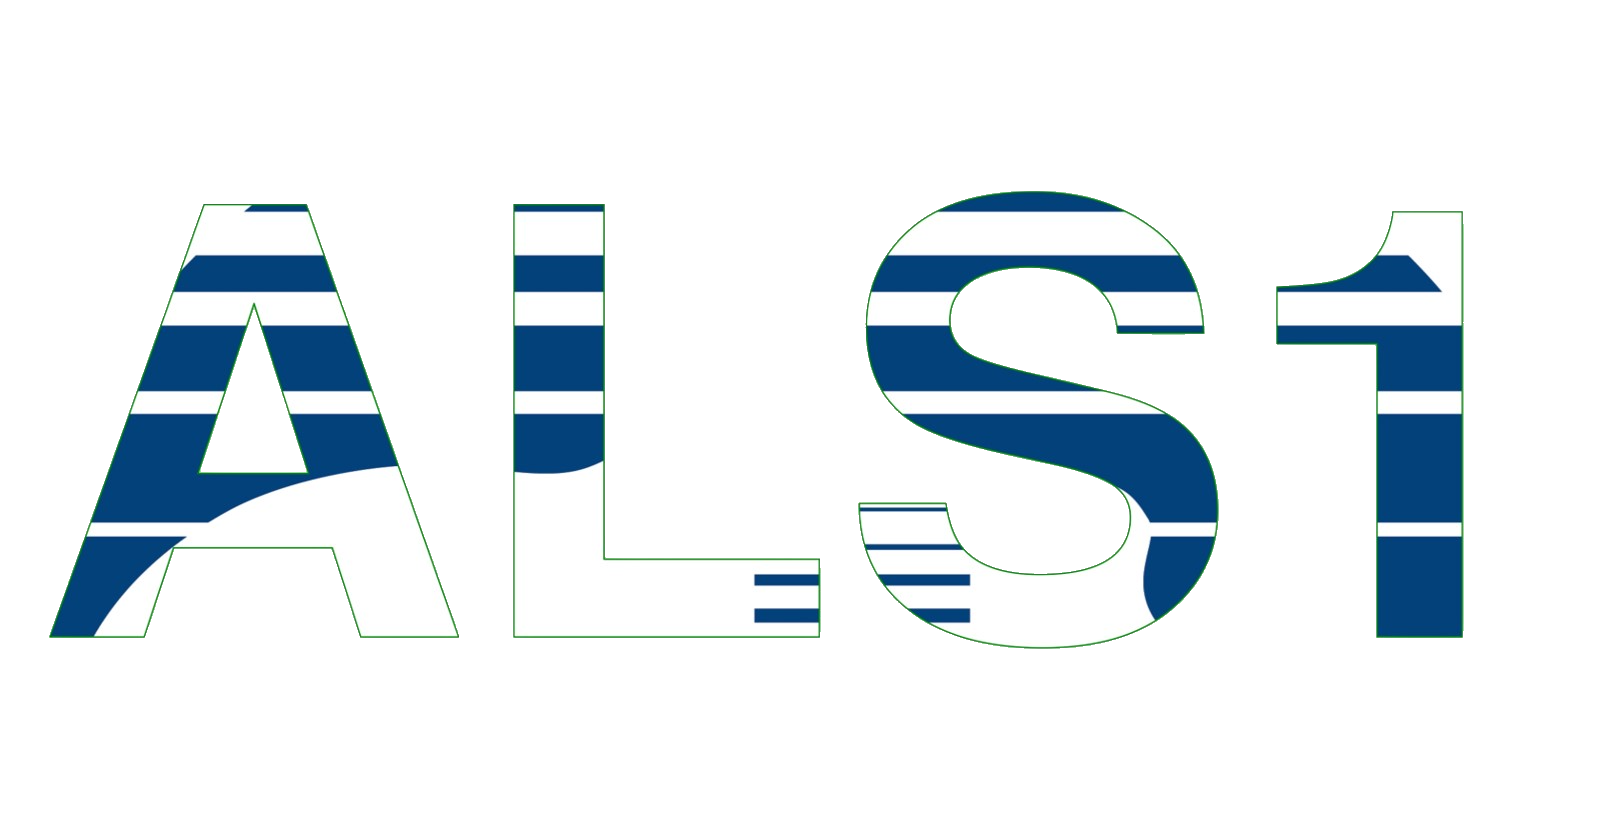 ALSA Medical Group